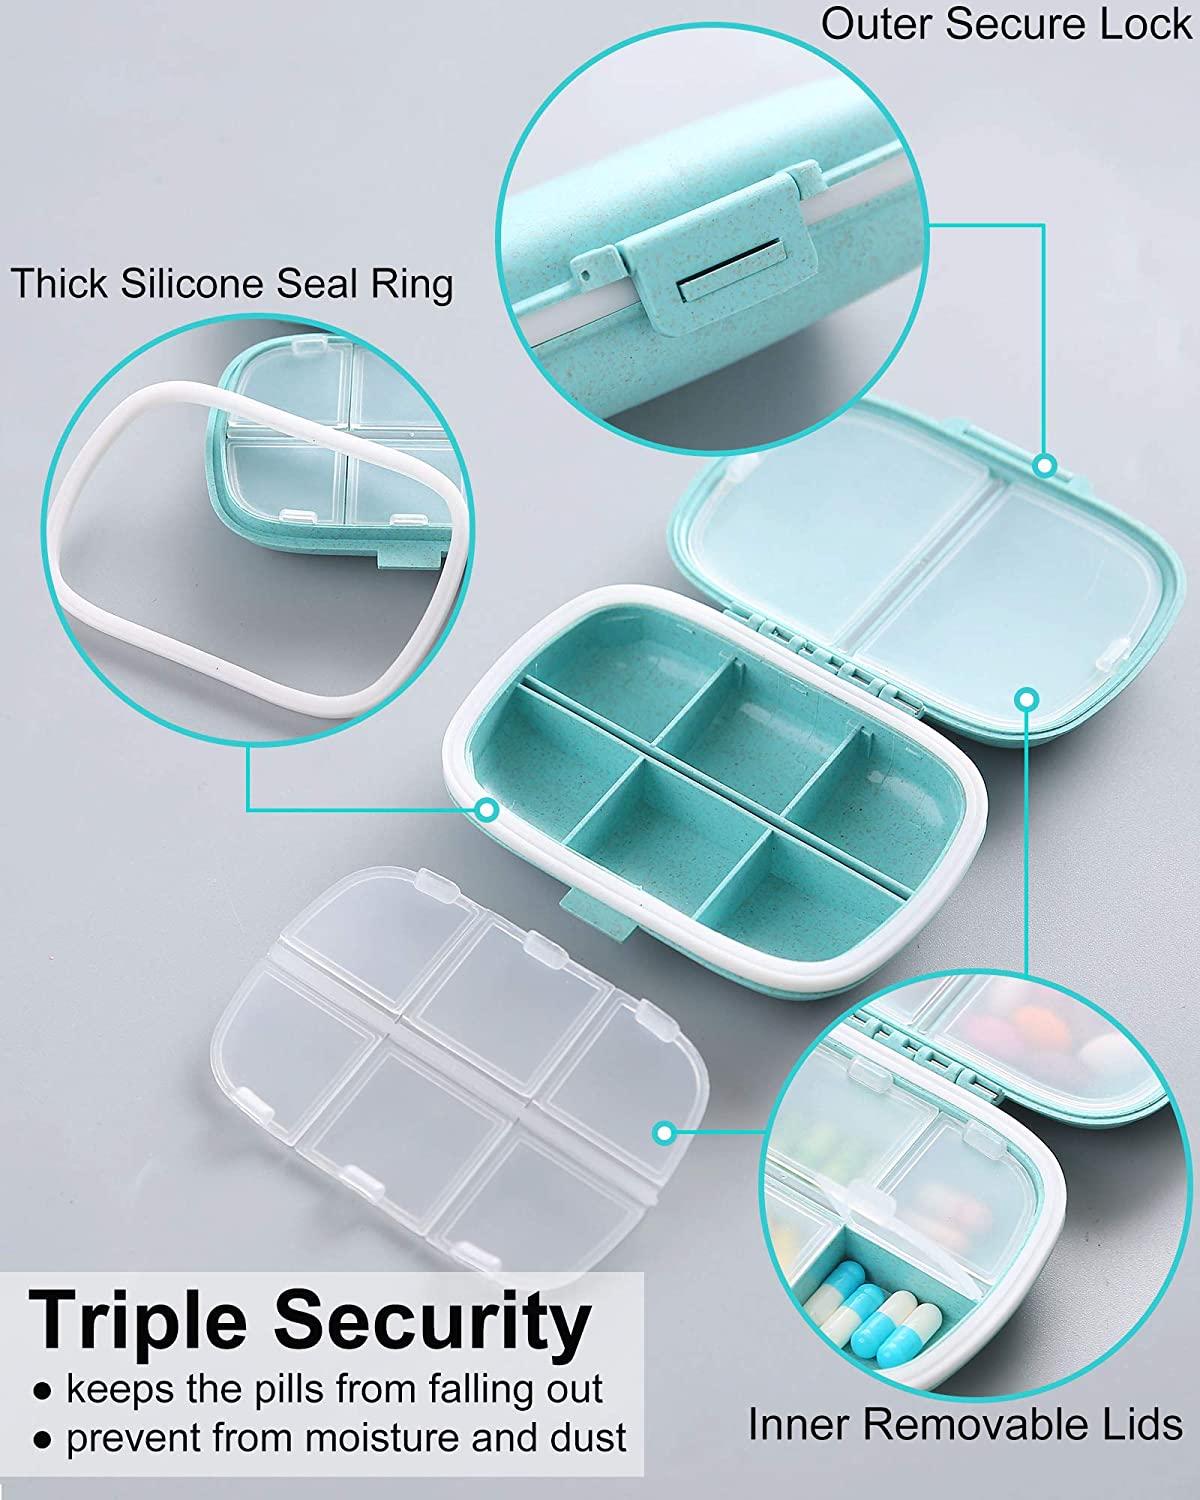 Portable Travel Pill Organizer Case For Pocket Or Purse Cute Small Daily  Pill Box Bpa Free Plastic Medicine Vitamin Holder Container (4  Compartments)